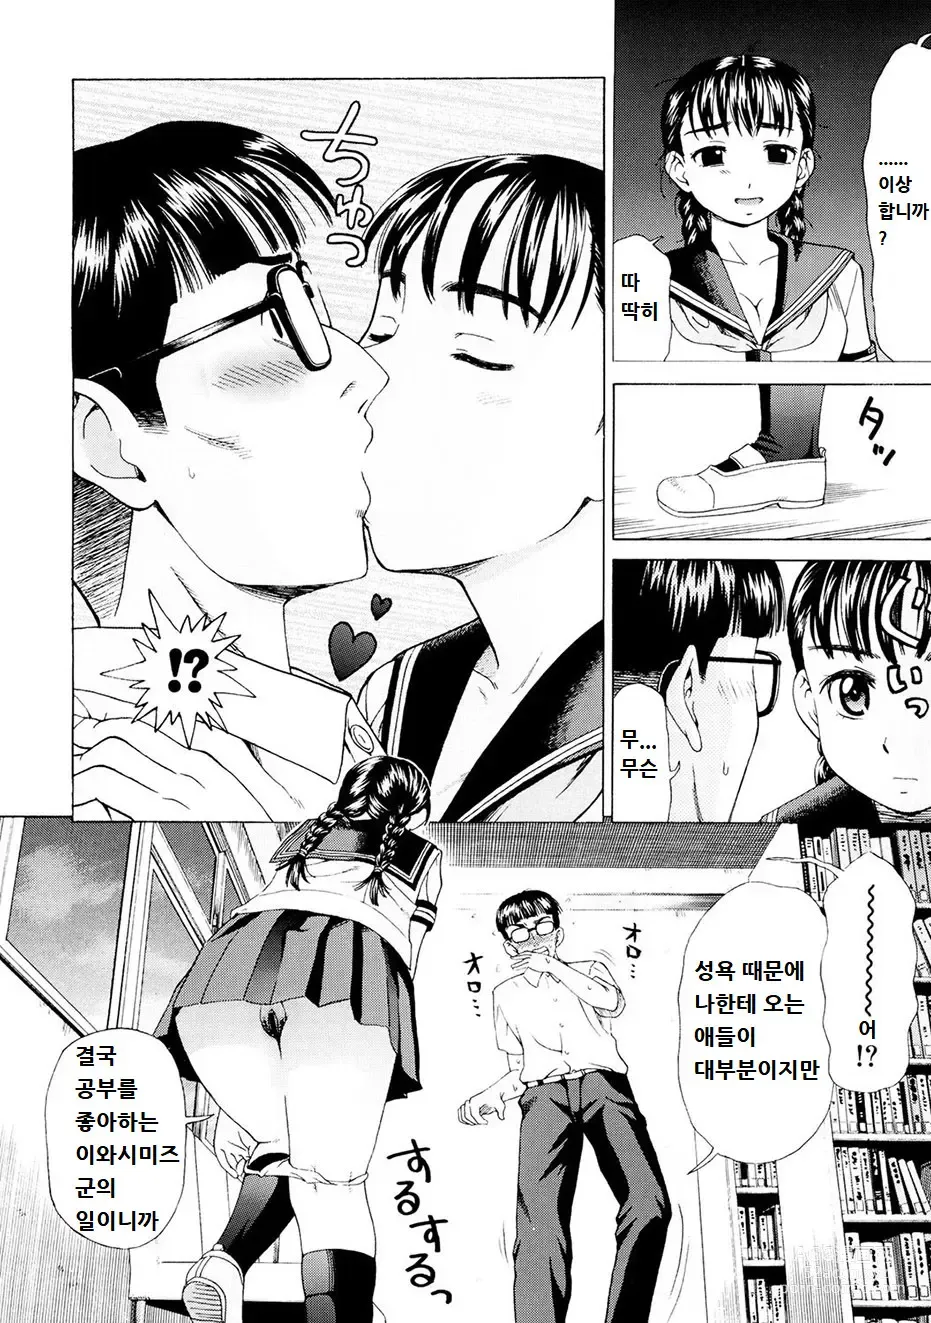 Page 5 of manga 도서실은 방과후의 창관 ~해질녘의 동정군~